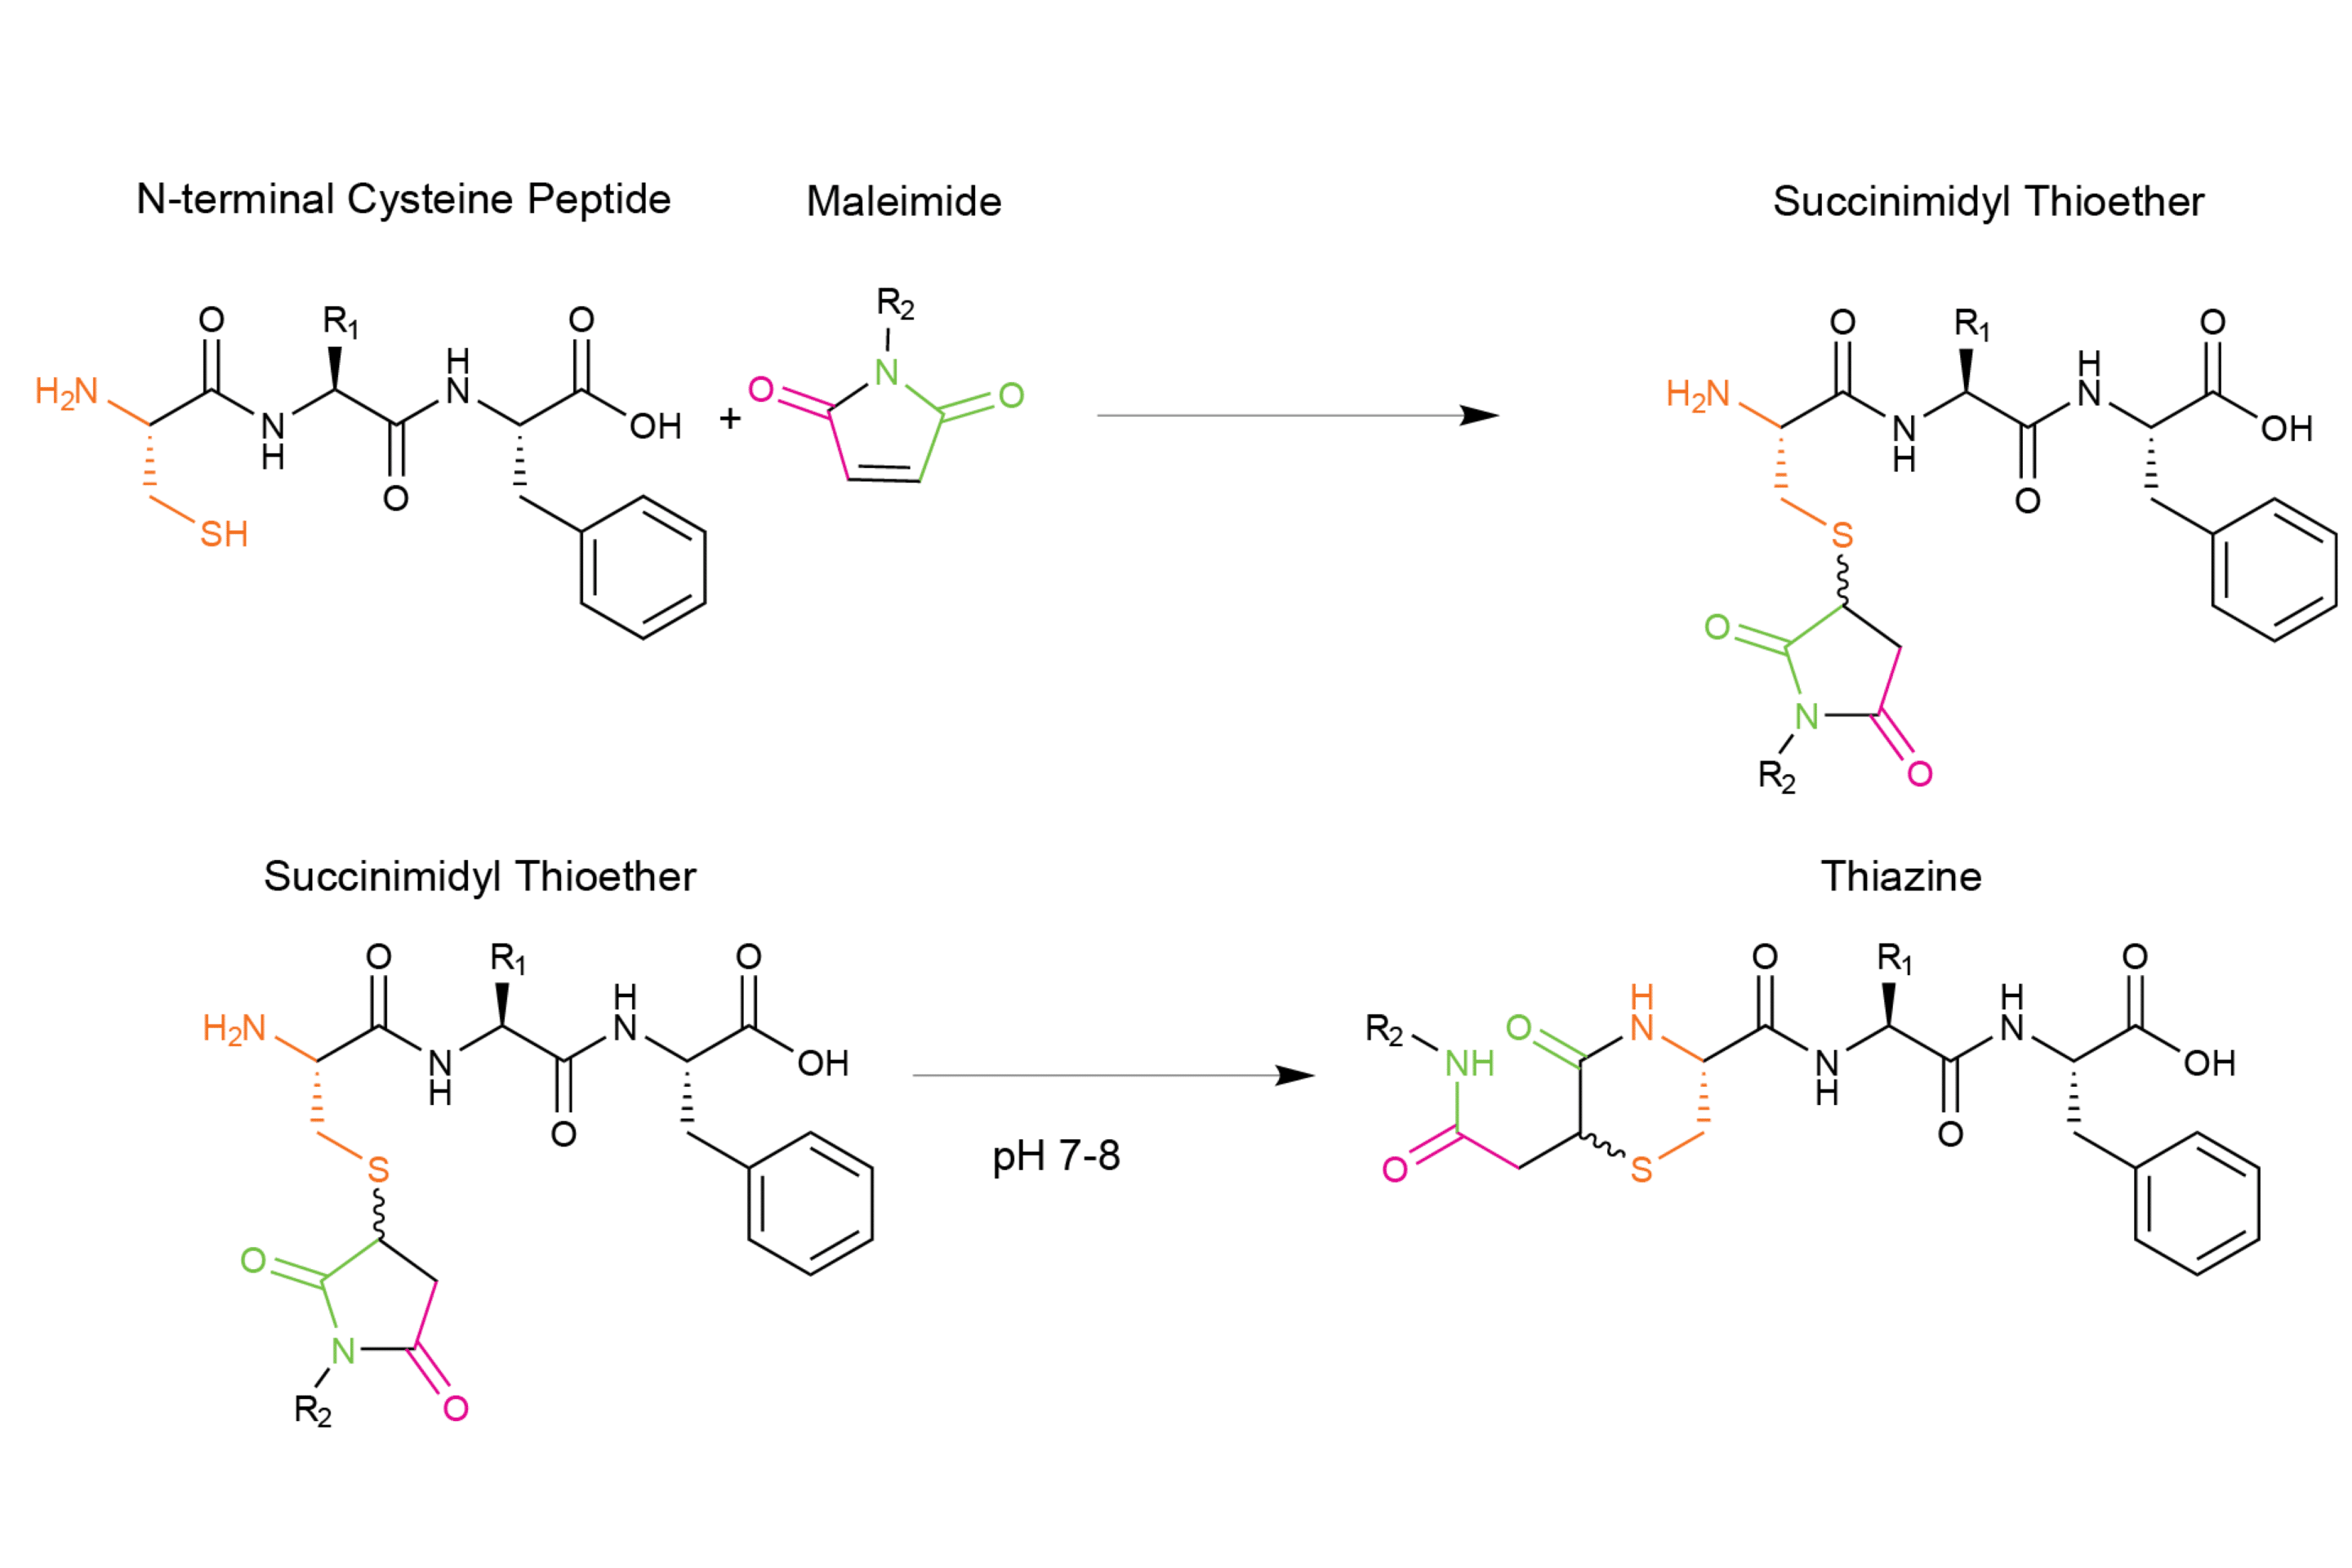 Thiazine rearrangement during thiol-maleimide coupling